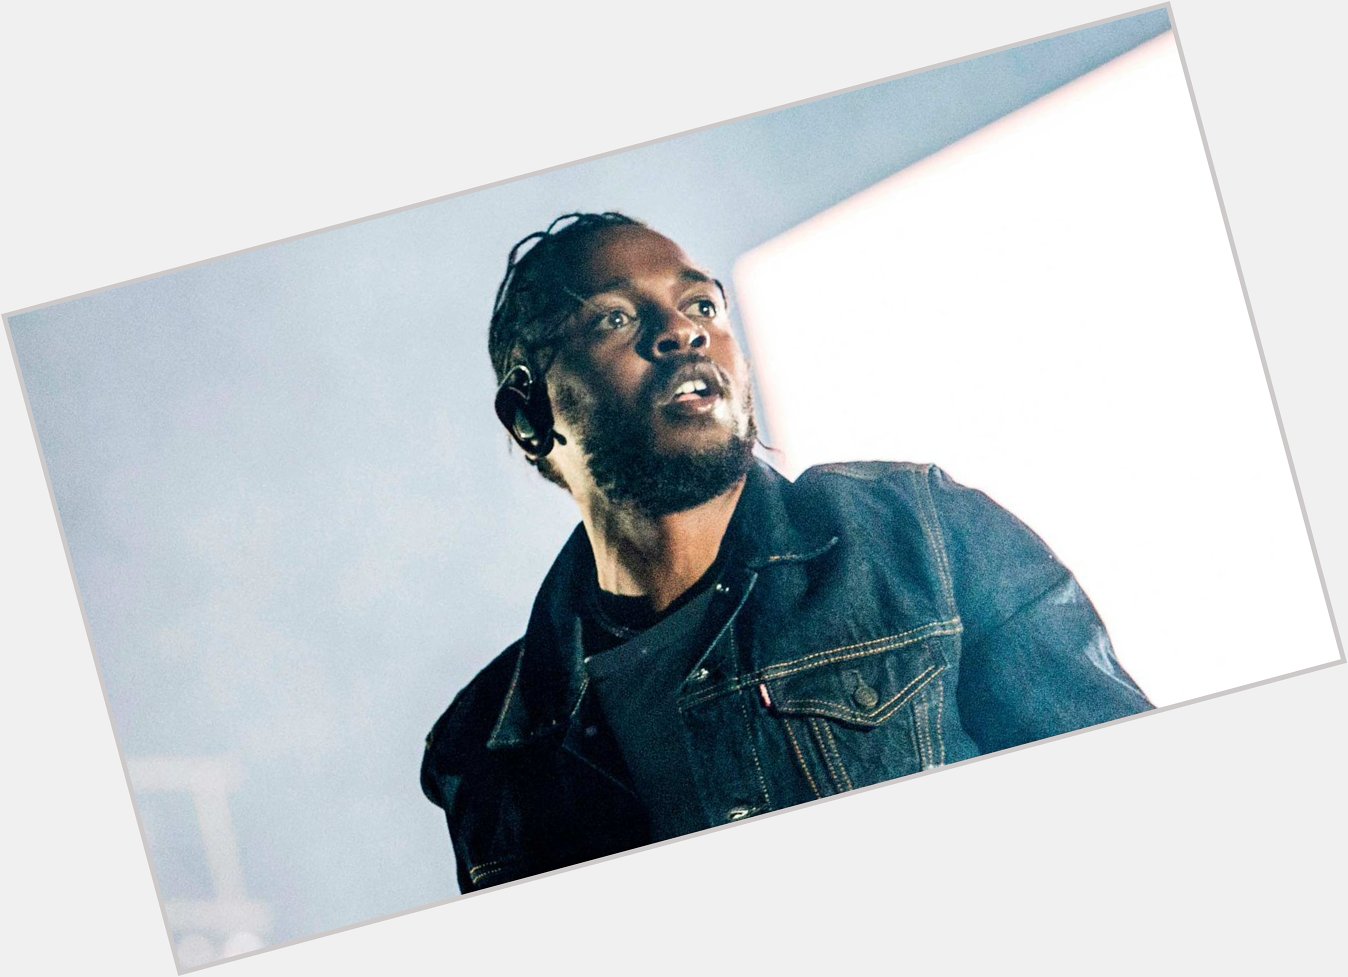 Happy 36th birthday to 17x Grammy-winner Kendrick Lamar. 